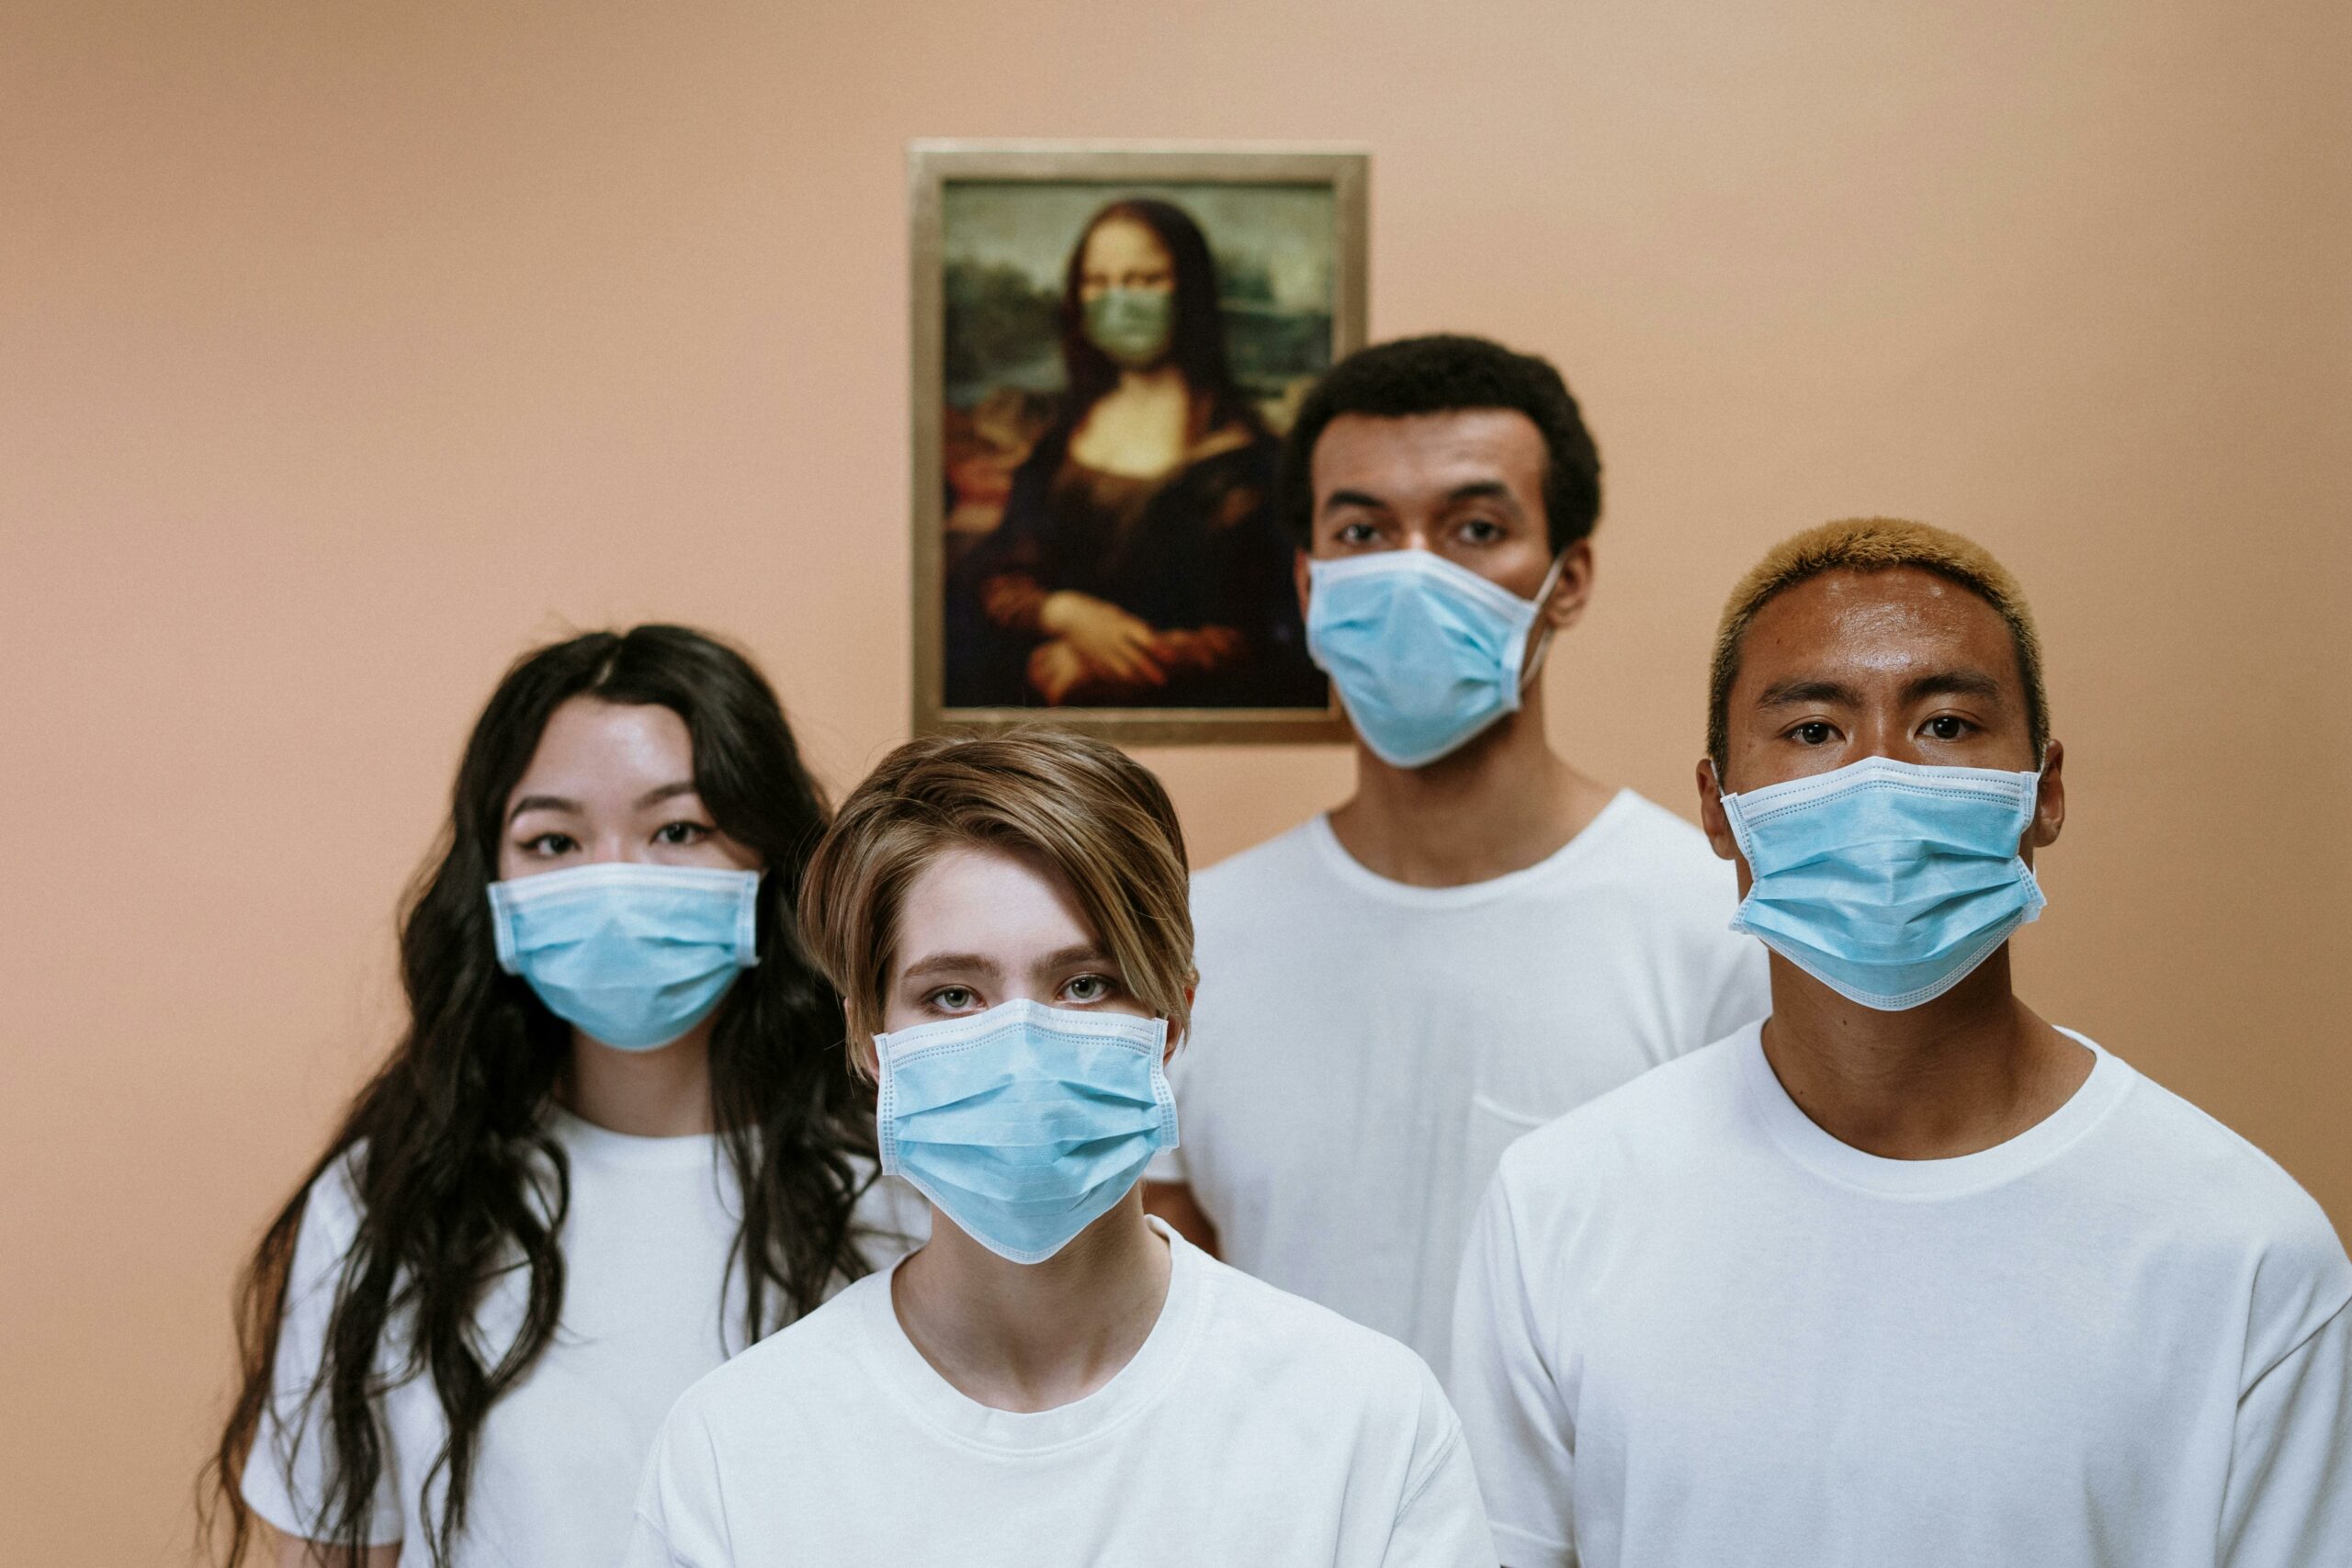 Masking for measles outbreak